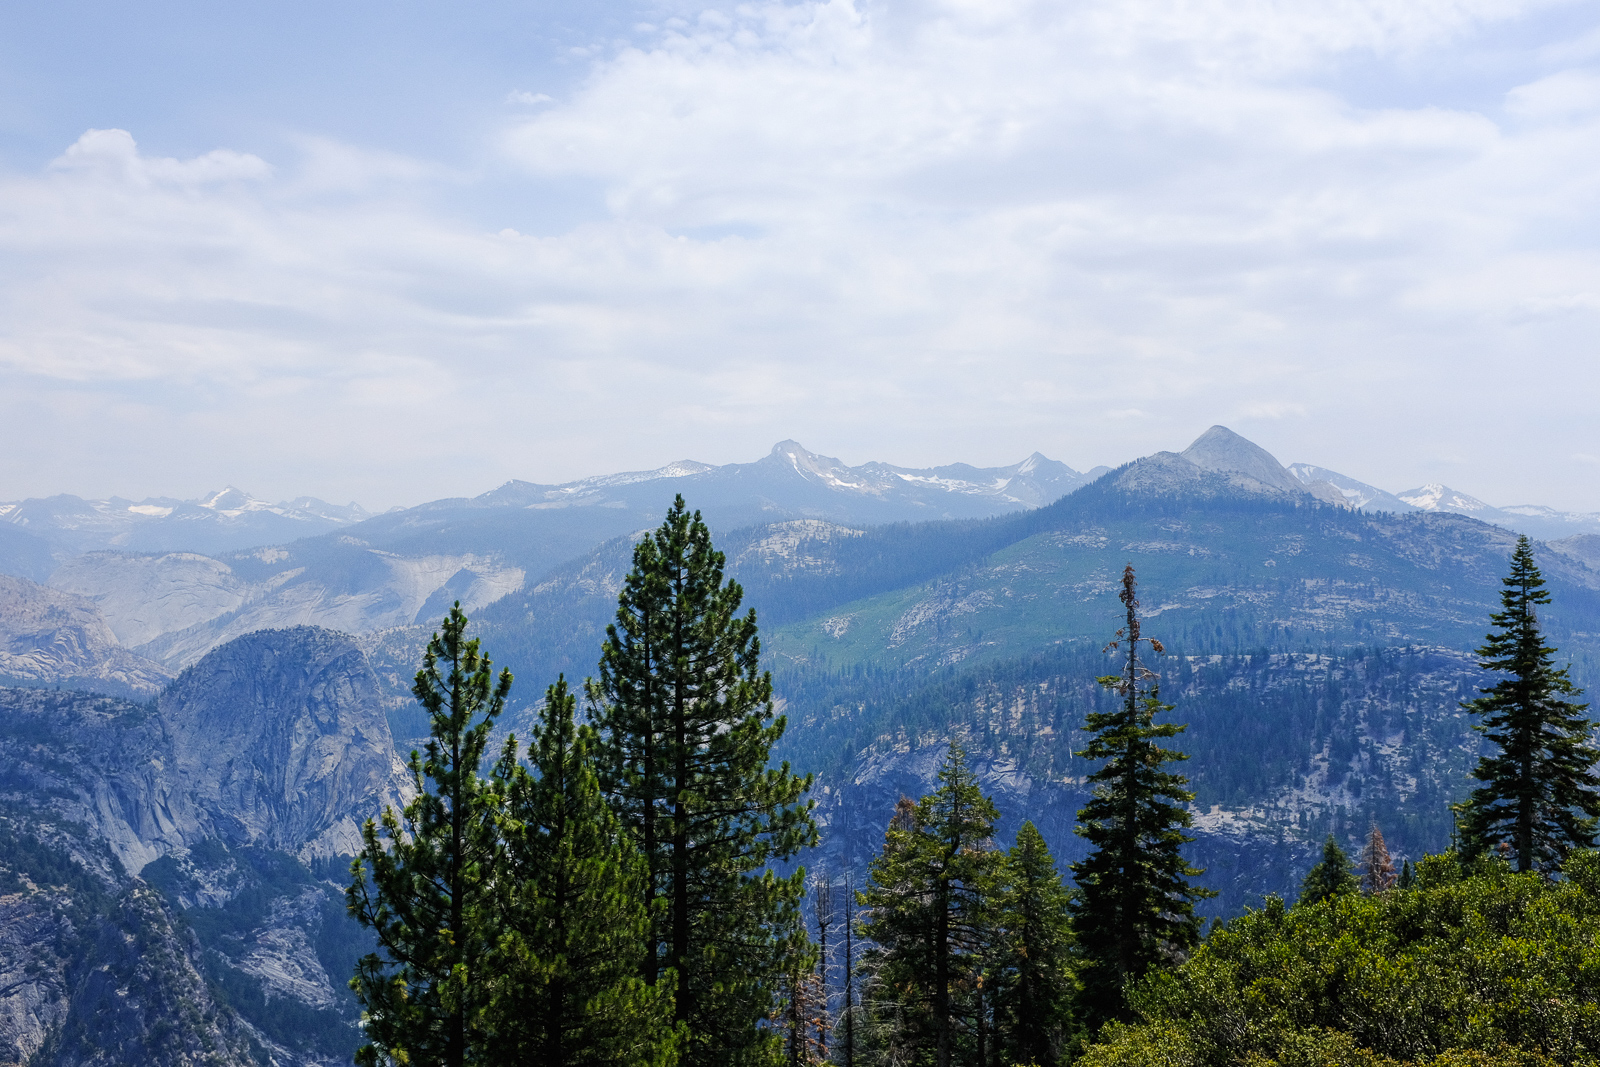  Yosemite National Park, California  